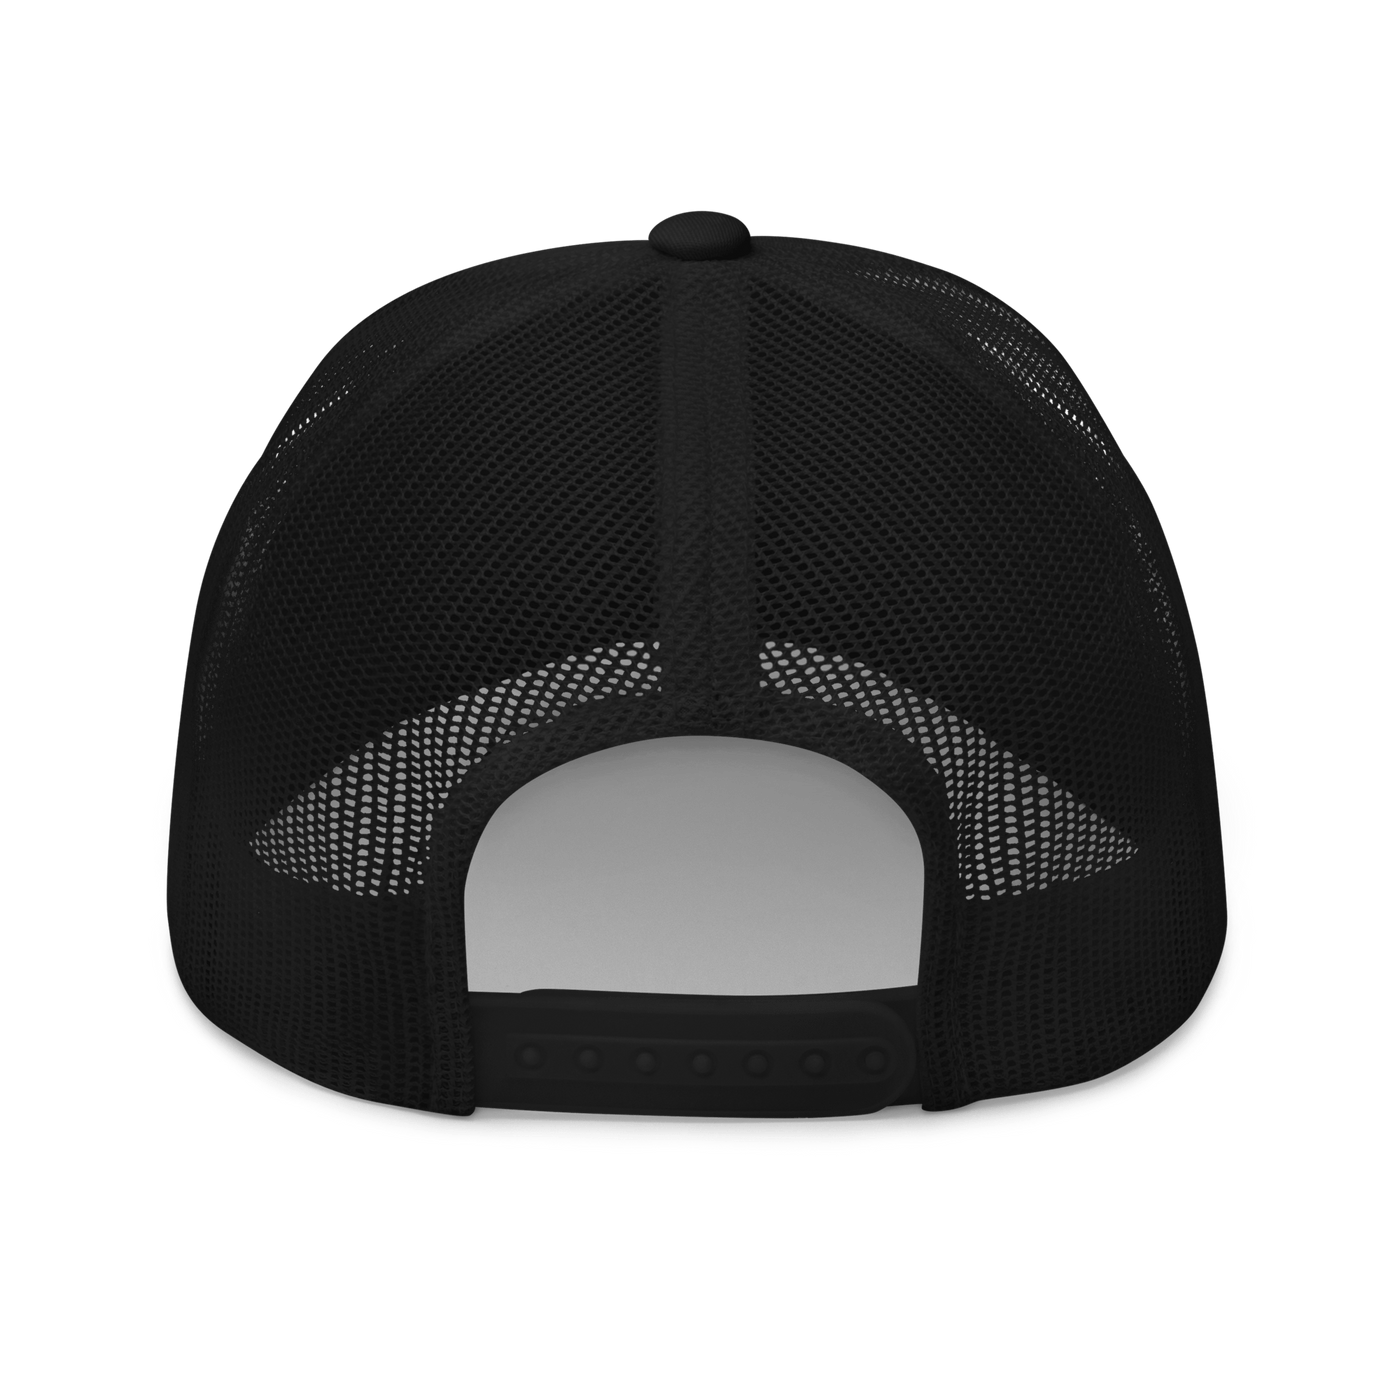 FAKE Trucker Cap - Black - - Just Another Cap Store